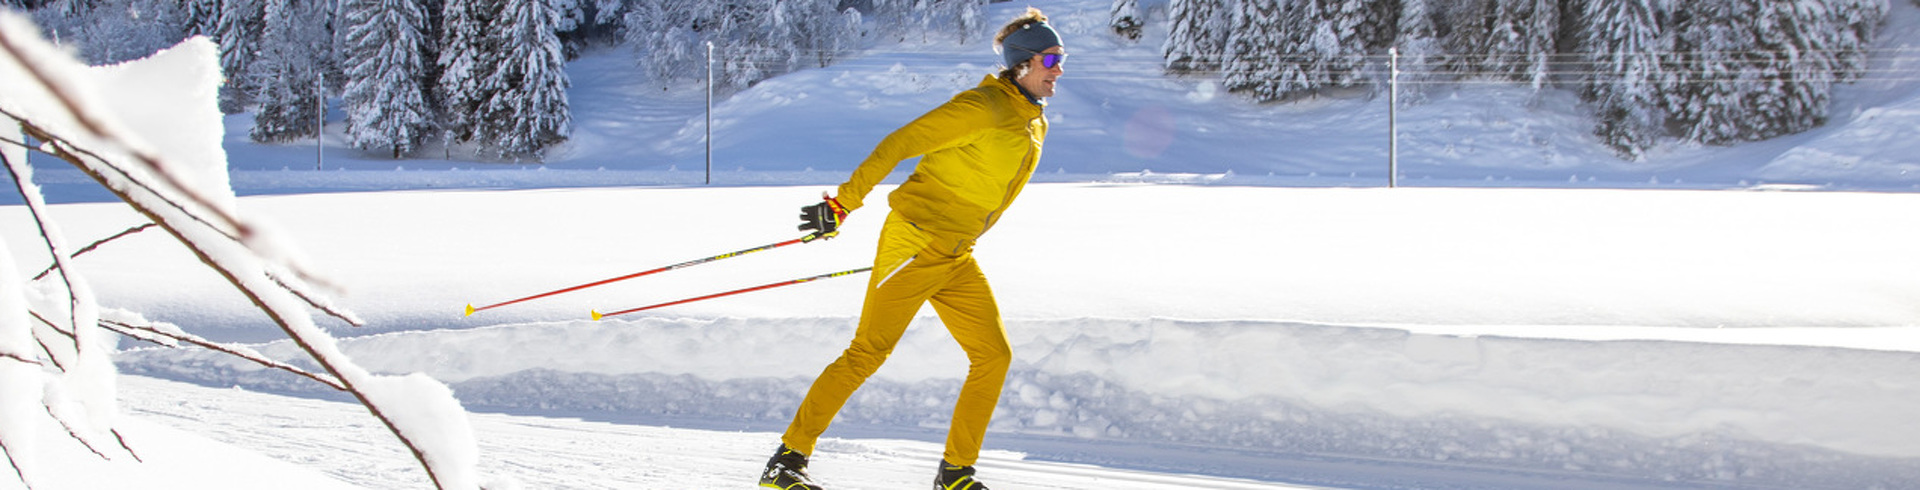 Wintersport bei Experte Hansi Kienle